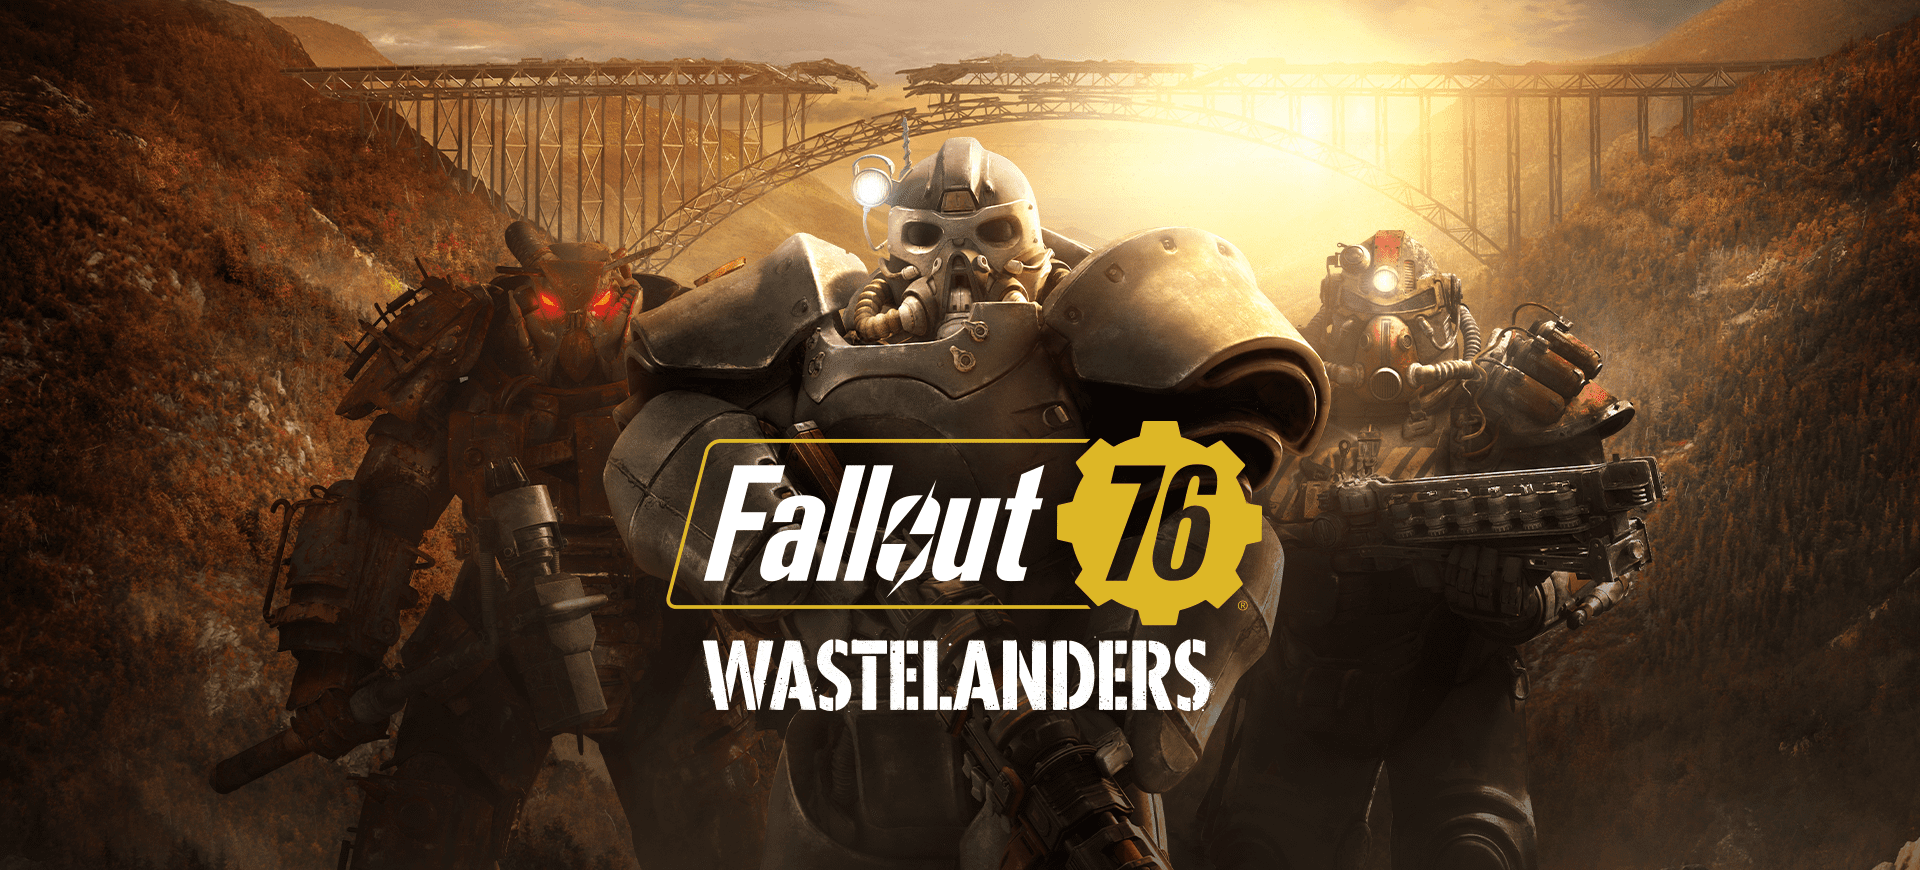 Fallout76 LargeHero Wastelanders